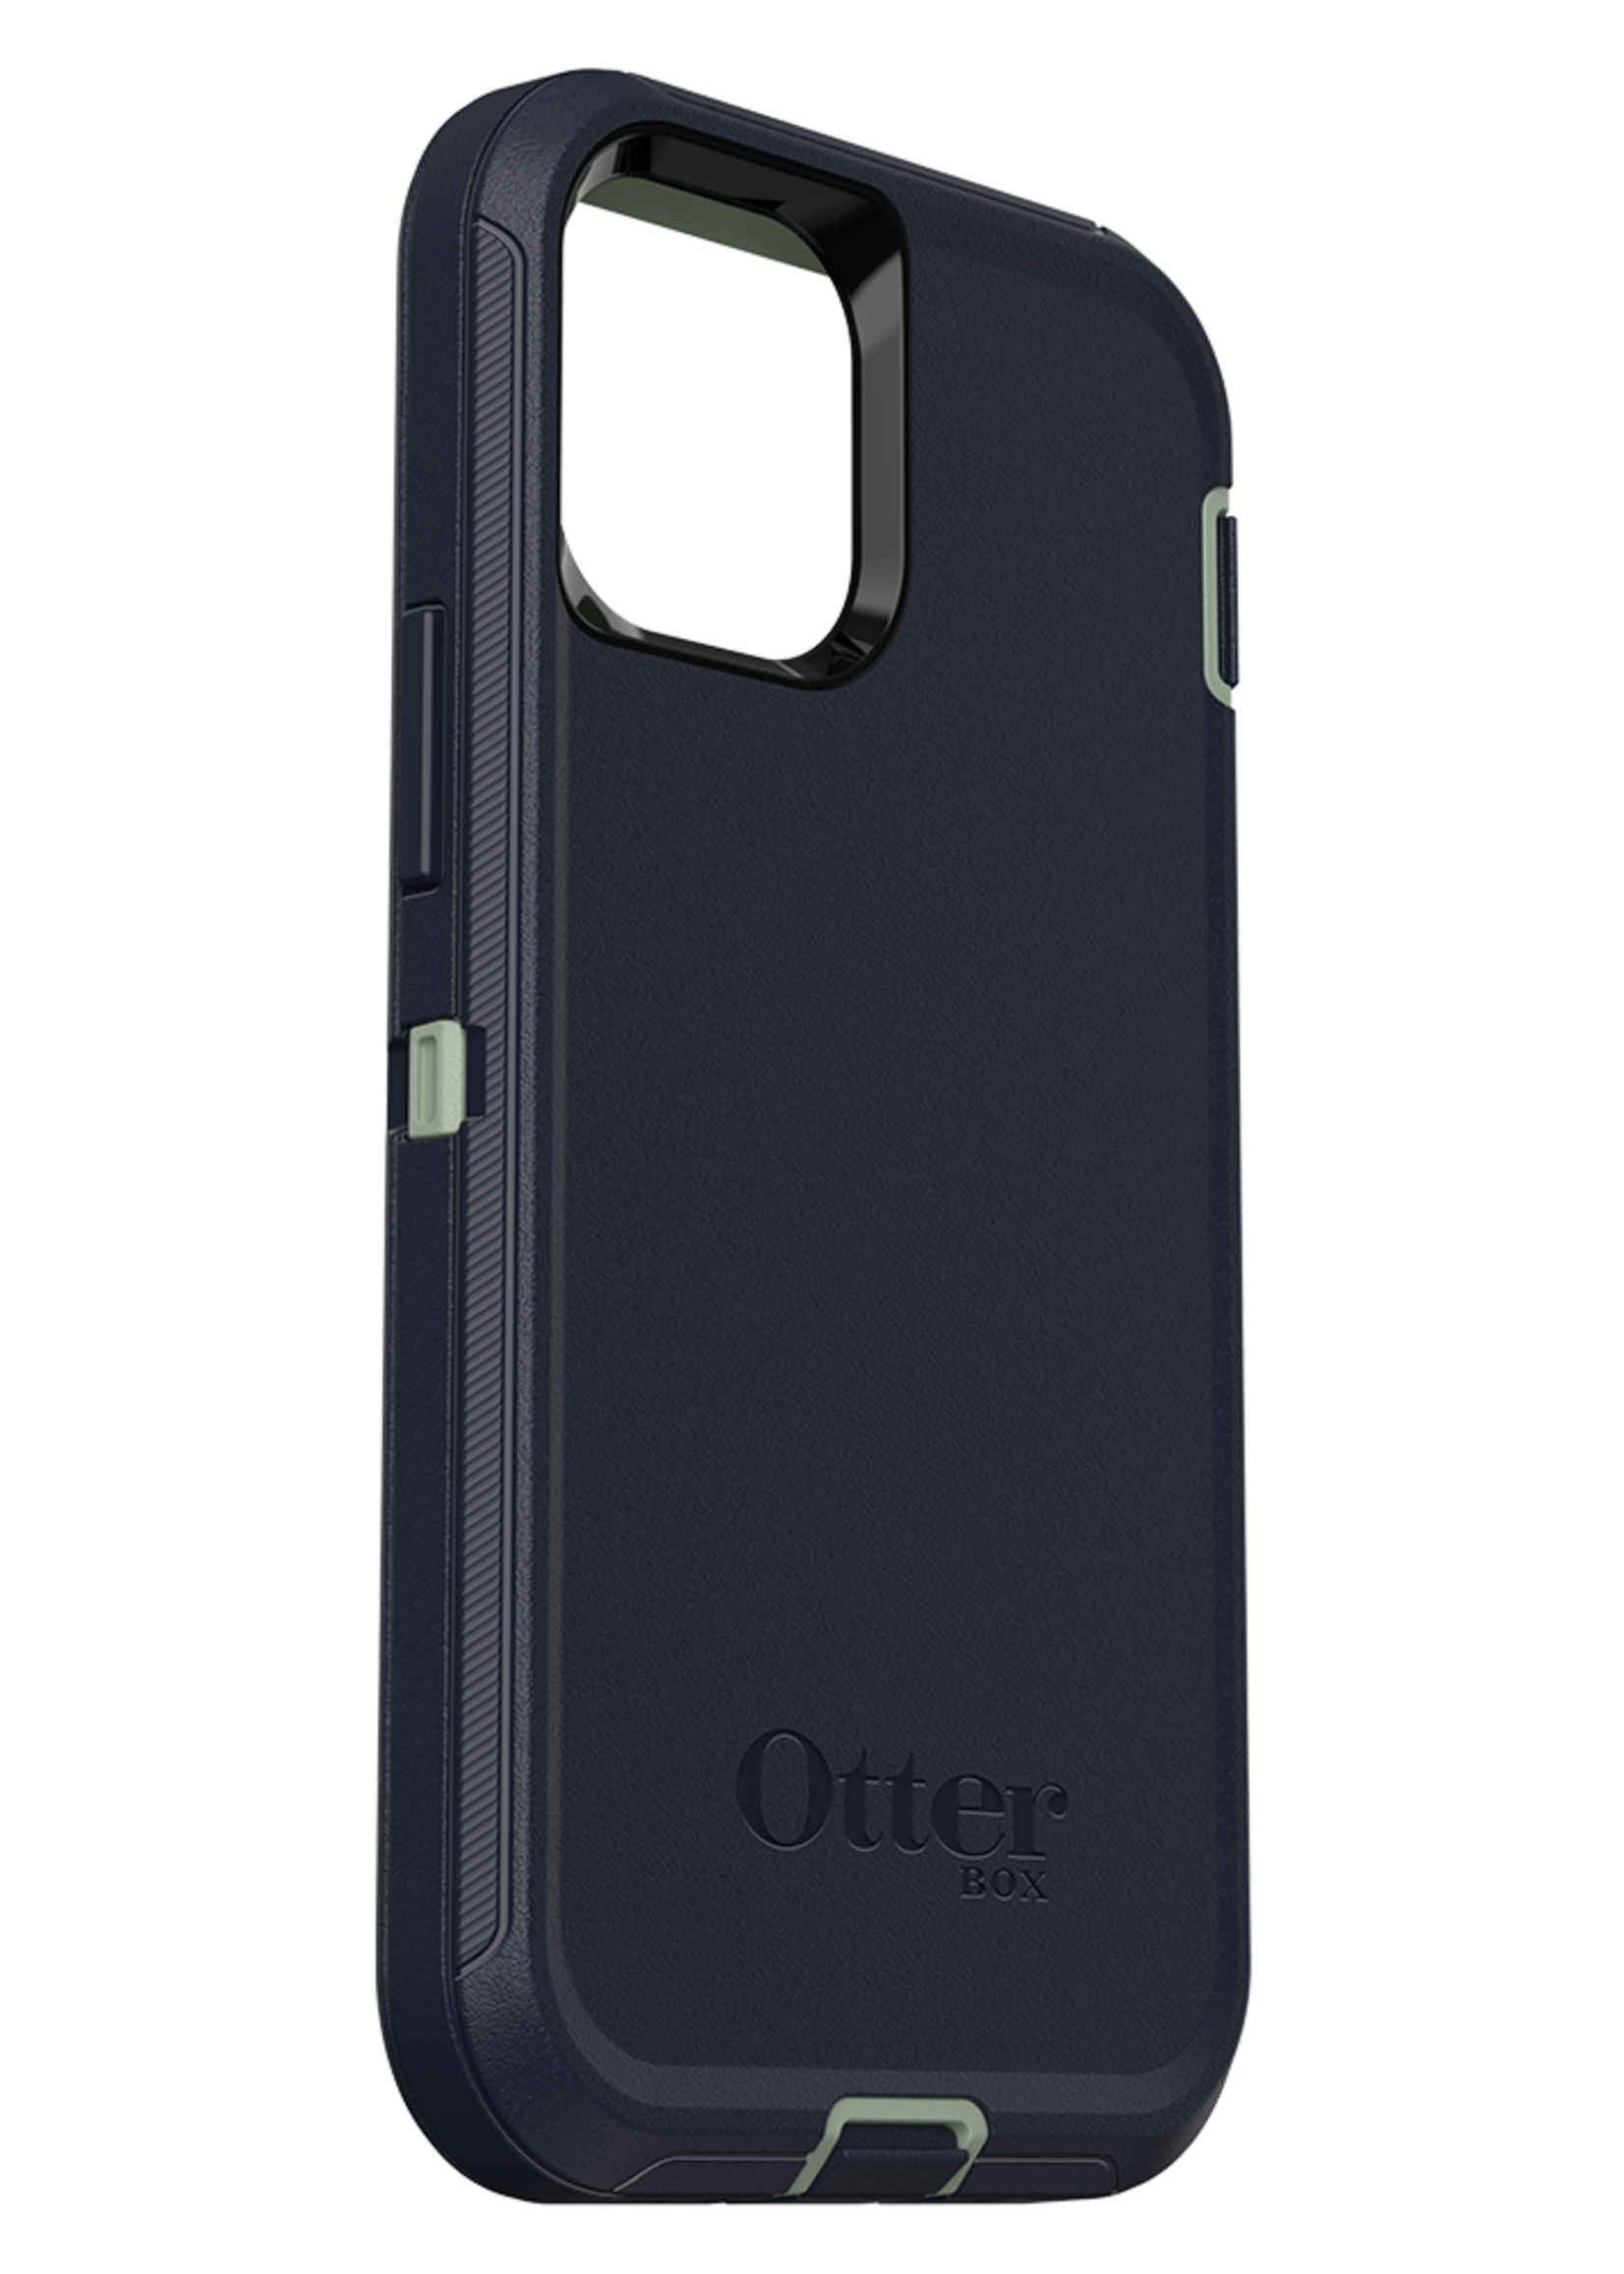 Otterbox OtterBox - Defender Case for Apple iPhone 12 mini - Varsity Blues